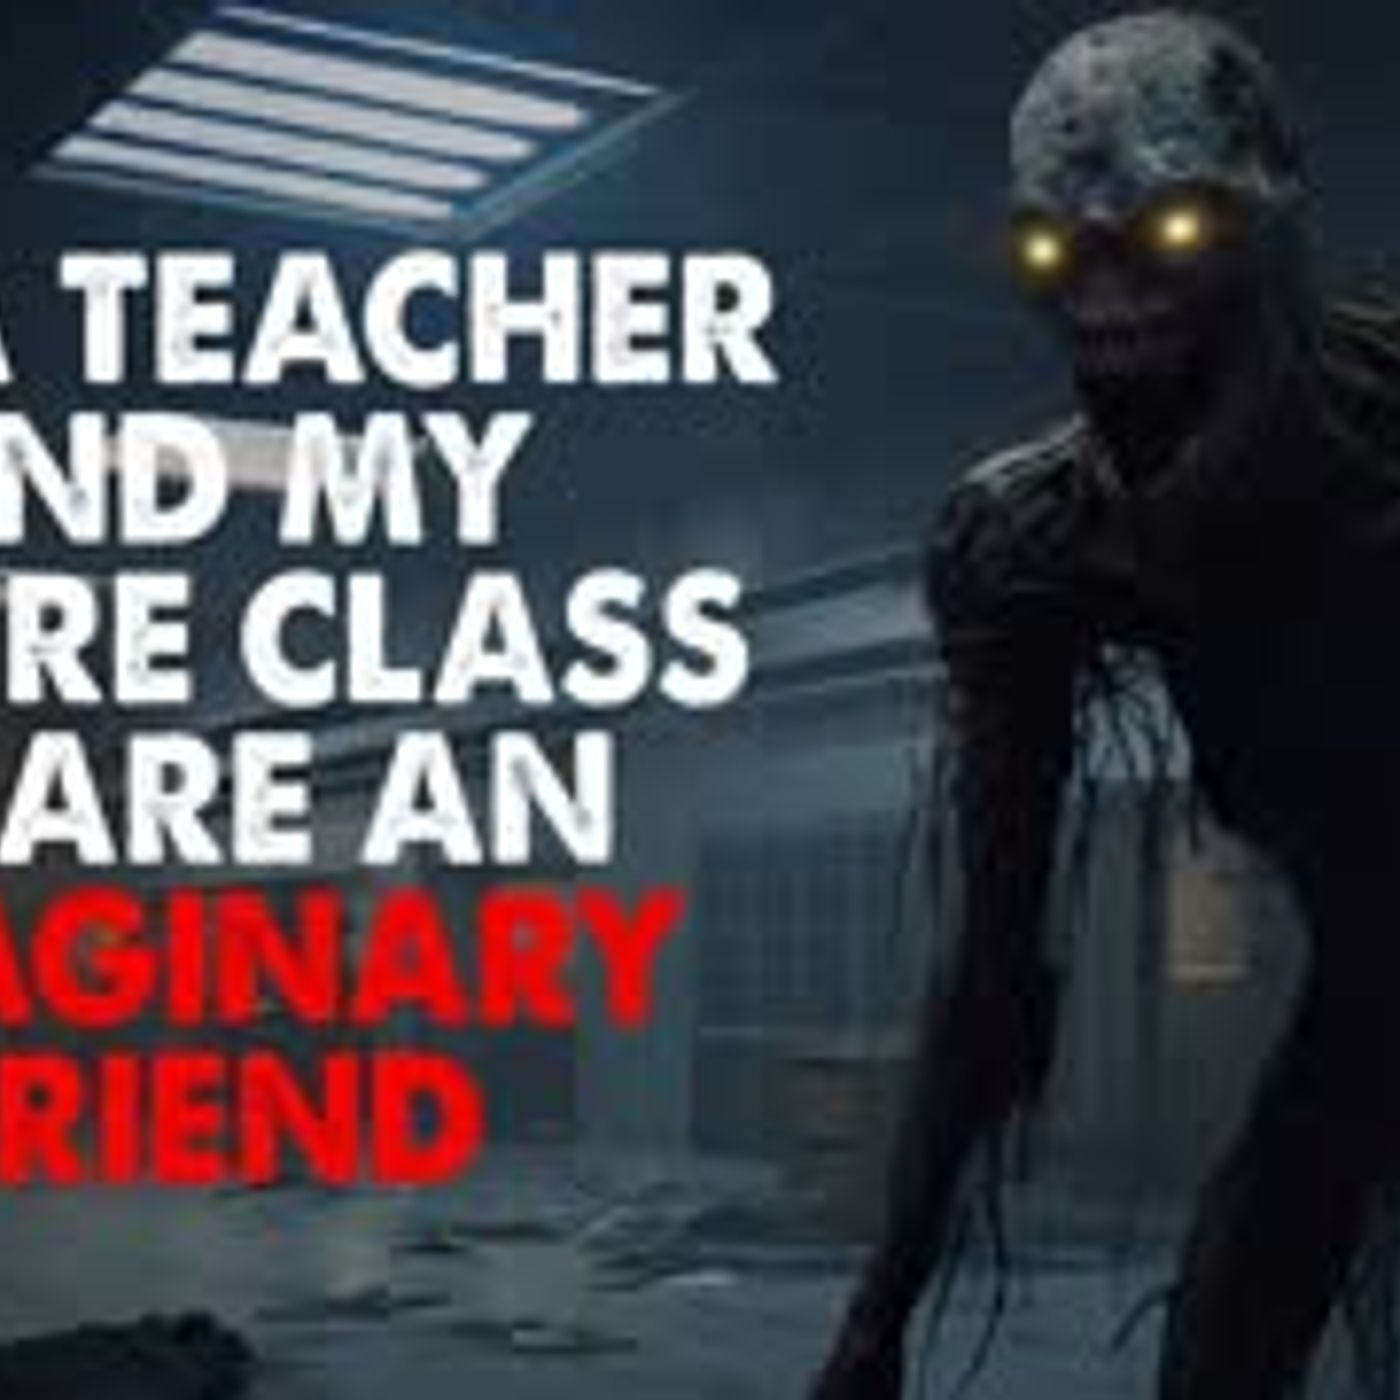 ”I’m a teacher, and all my students share an imaginary friend” Creepypasta